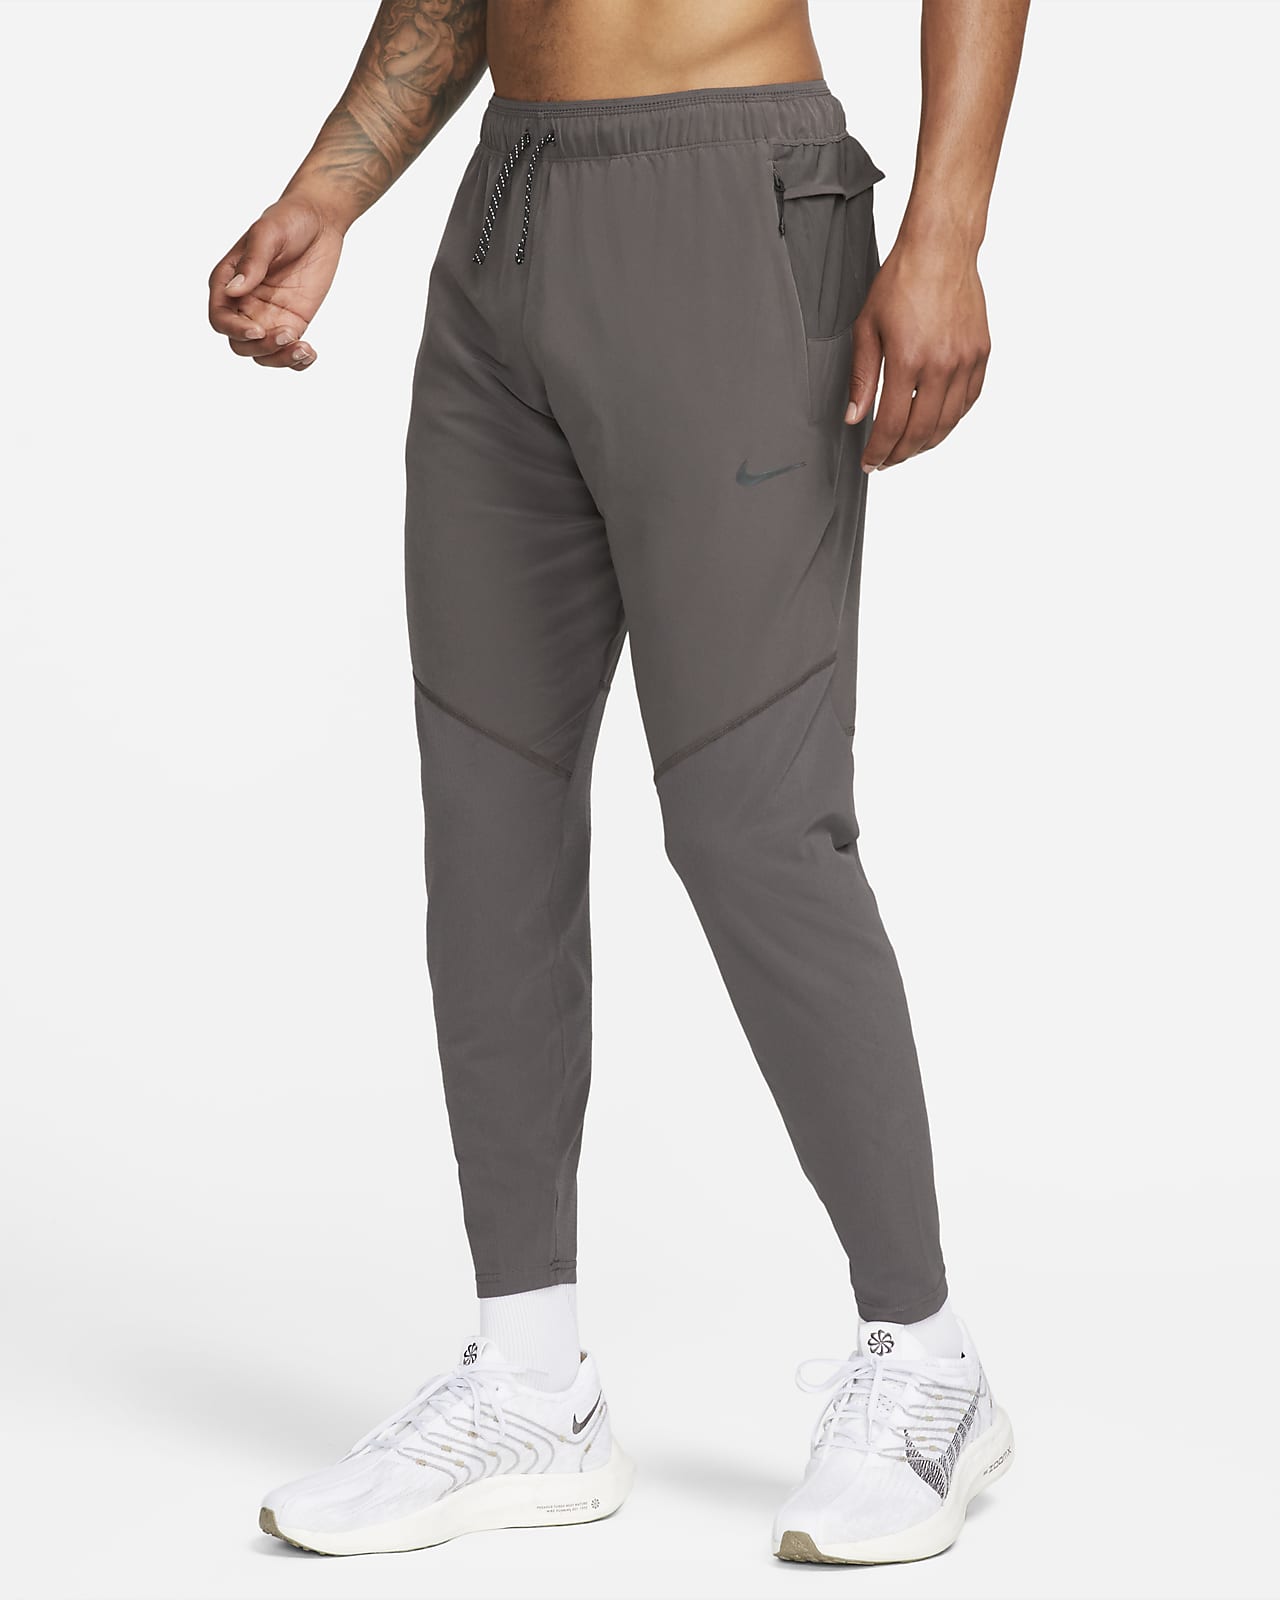 Nike Dri-Fit Trouser pants, Men's Fashion, Bottoms, Trousers on Carousell